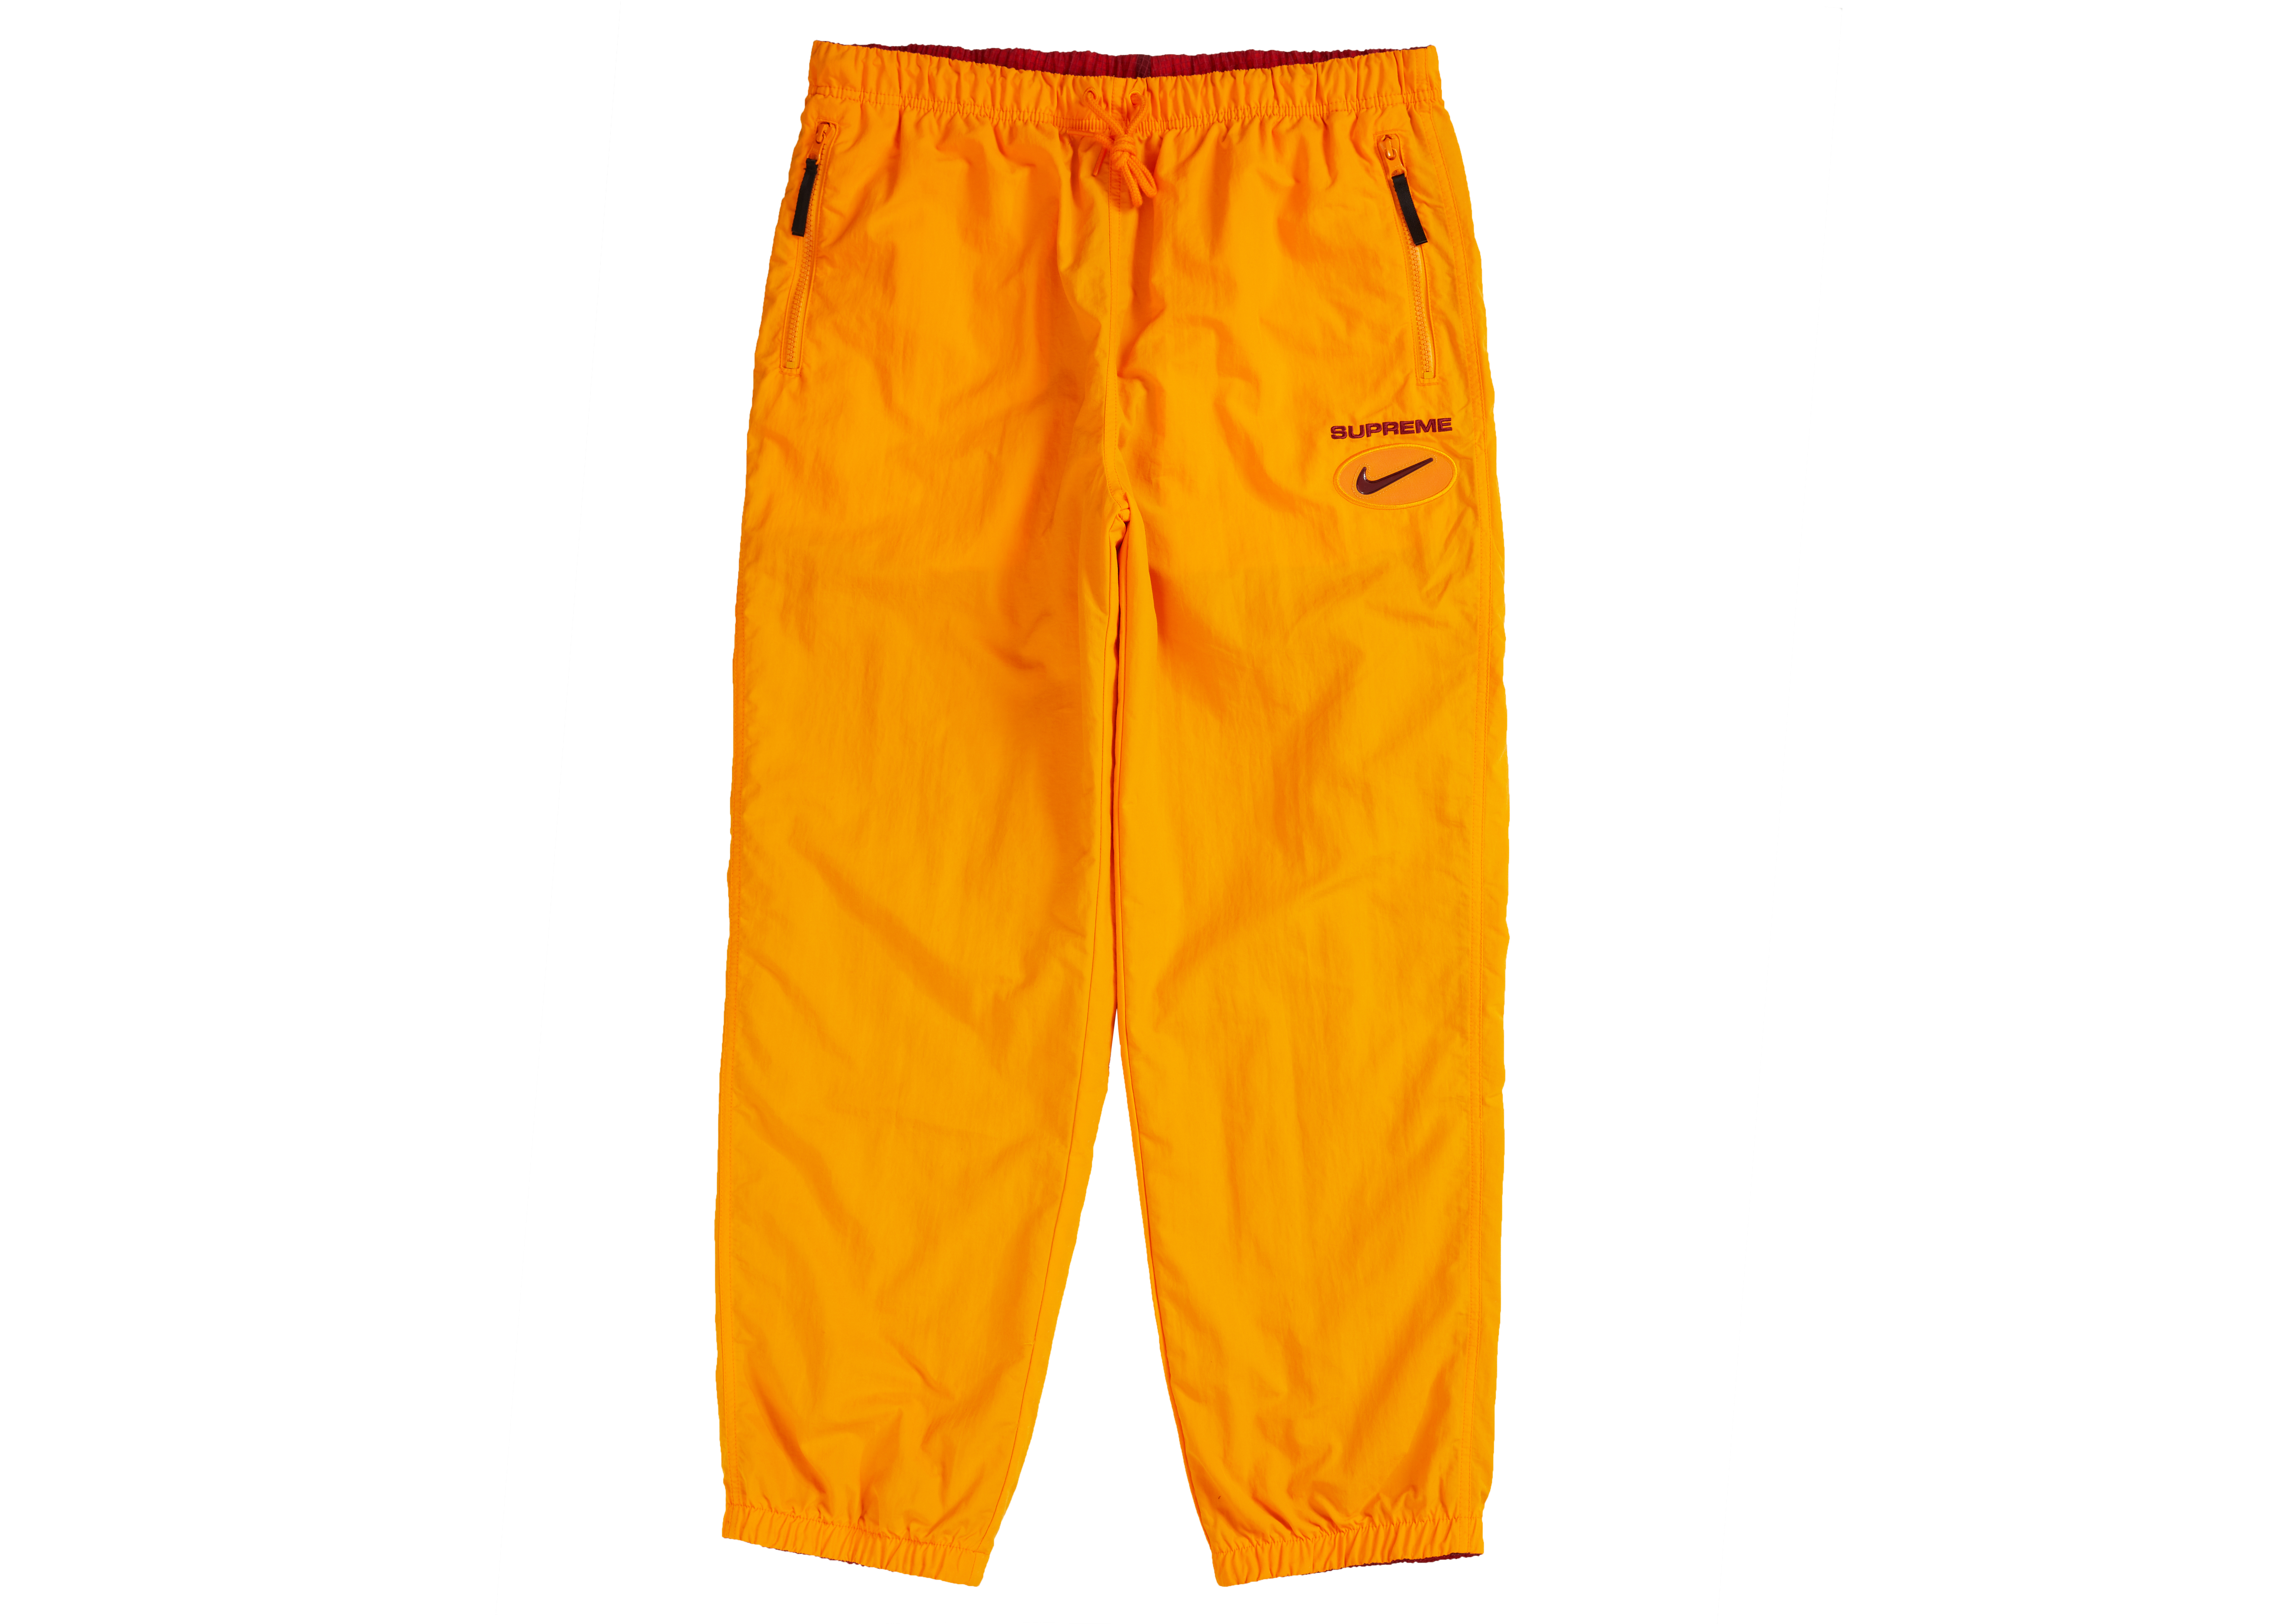 Supreme x Nike Jewel Reversible Ripstop Pant Orange